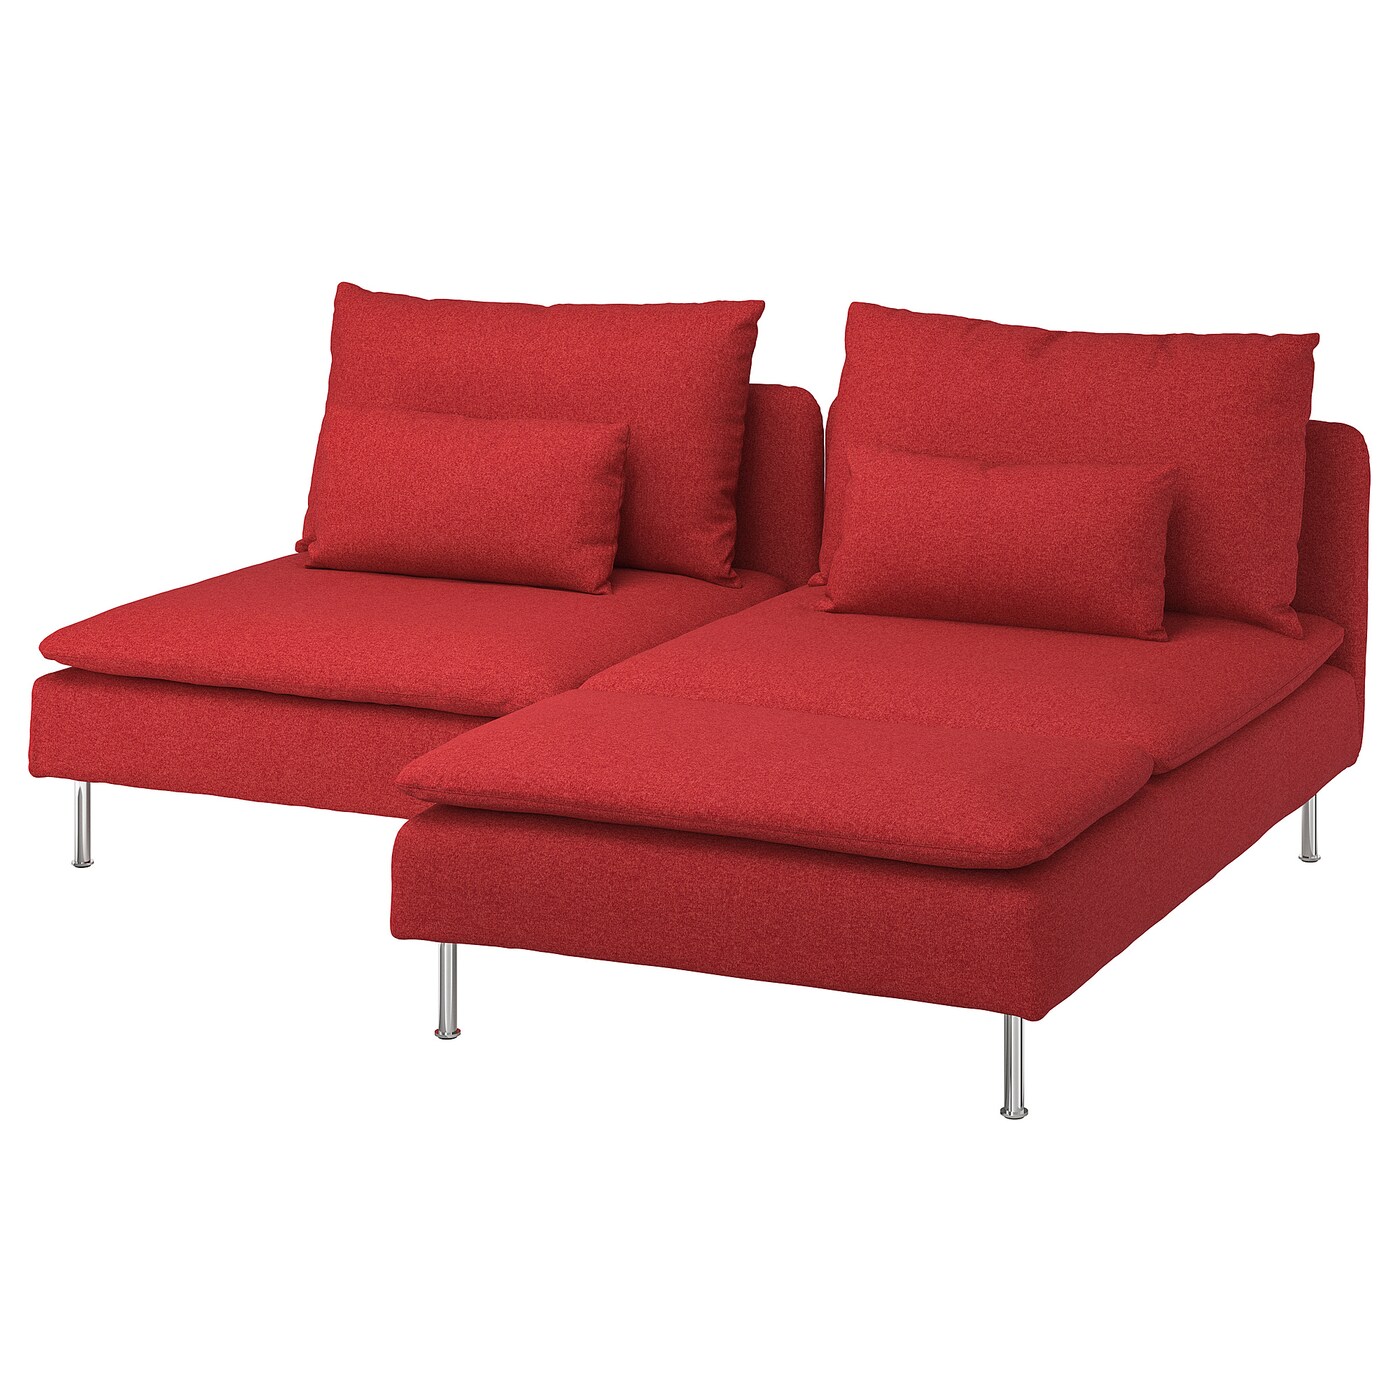 СЁДЕРХАМН 2 раскладывающихся дивана, Тонеруд красный SODERHAMN IKEA